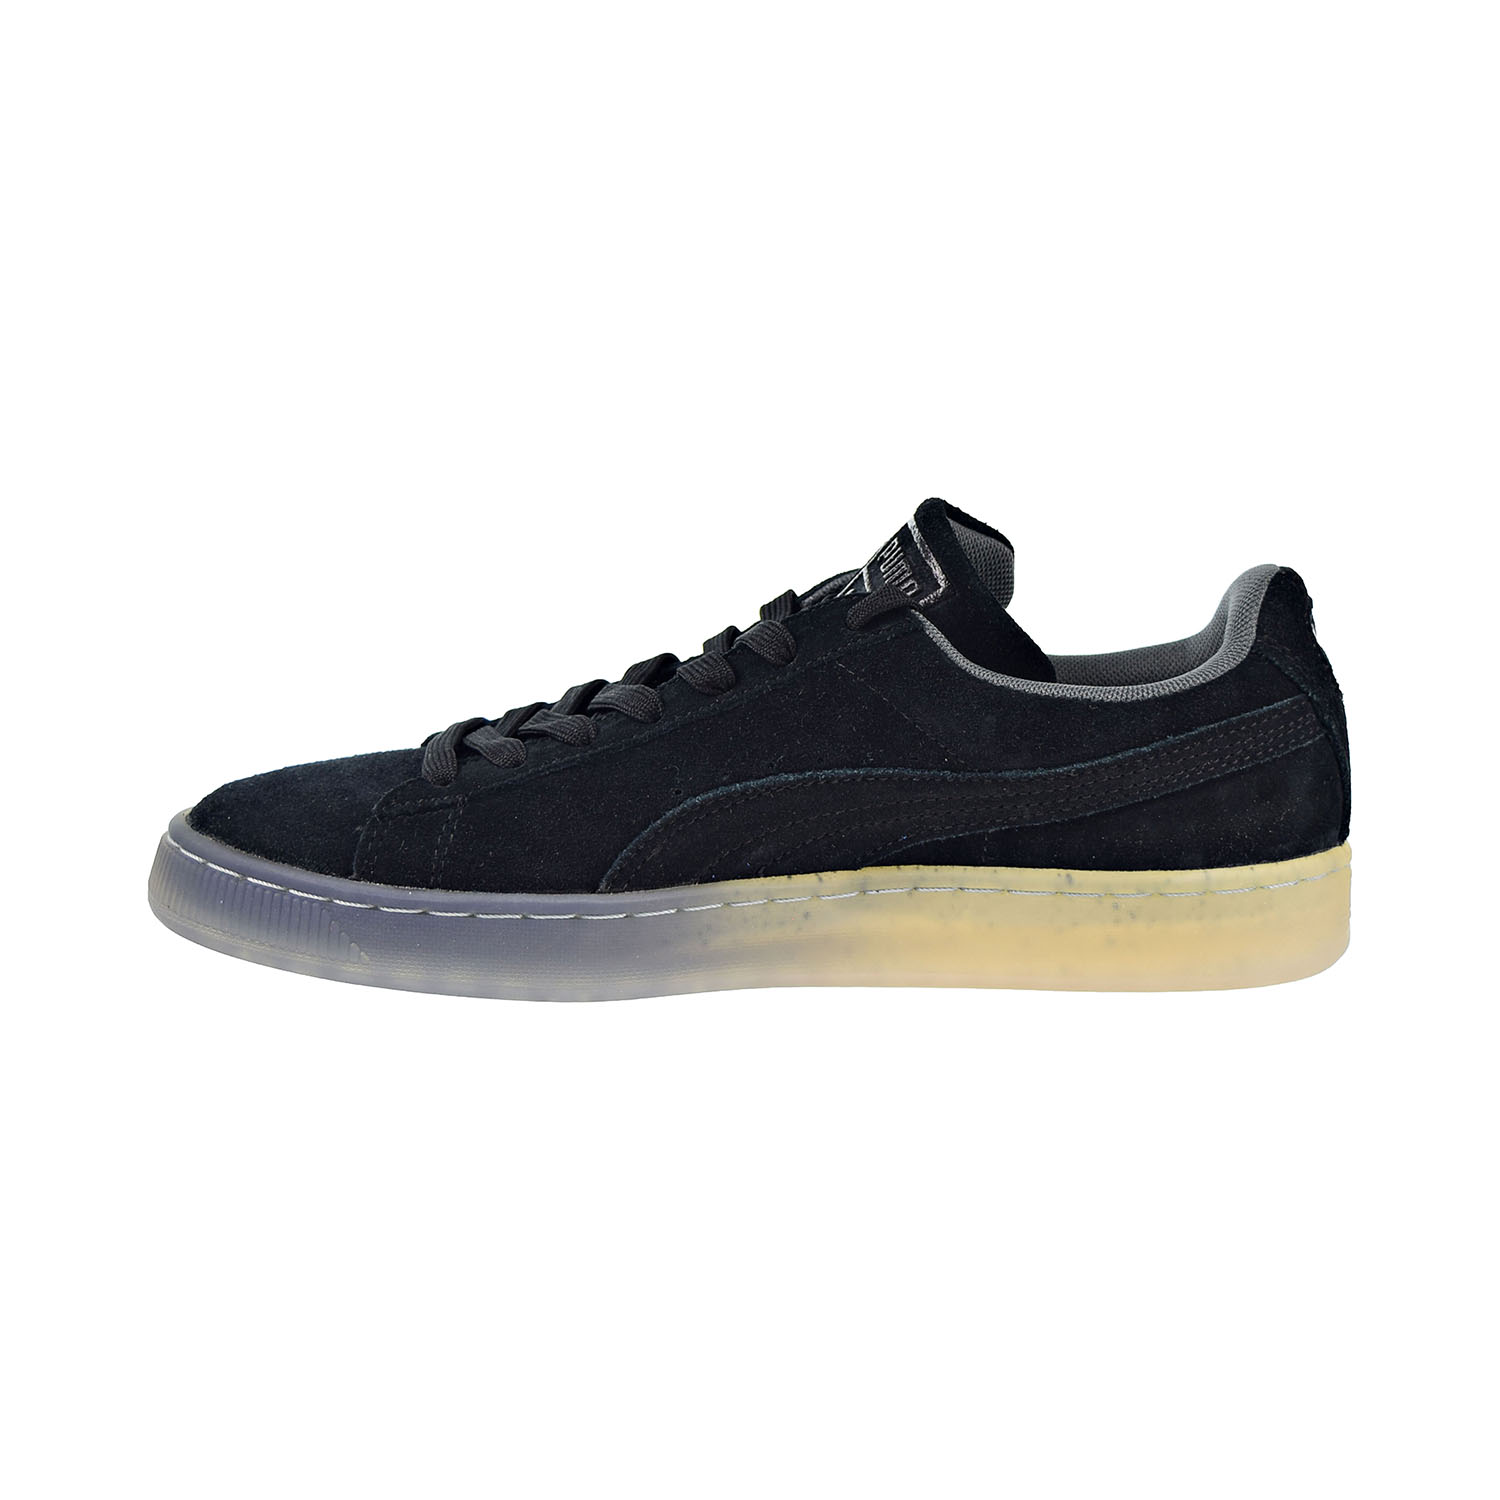 Puma Suede Classic Fade Future Men's Shoes Black 361351-02 - image 4 of 6